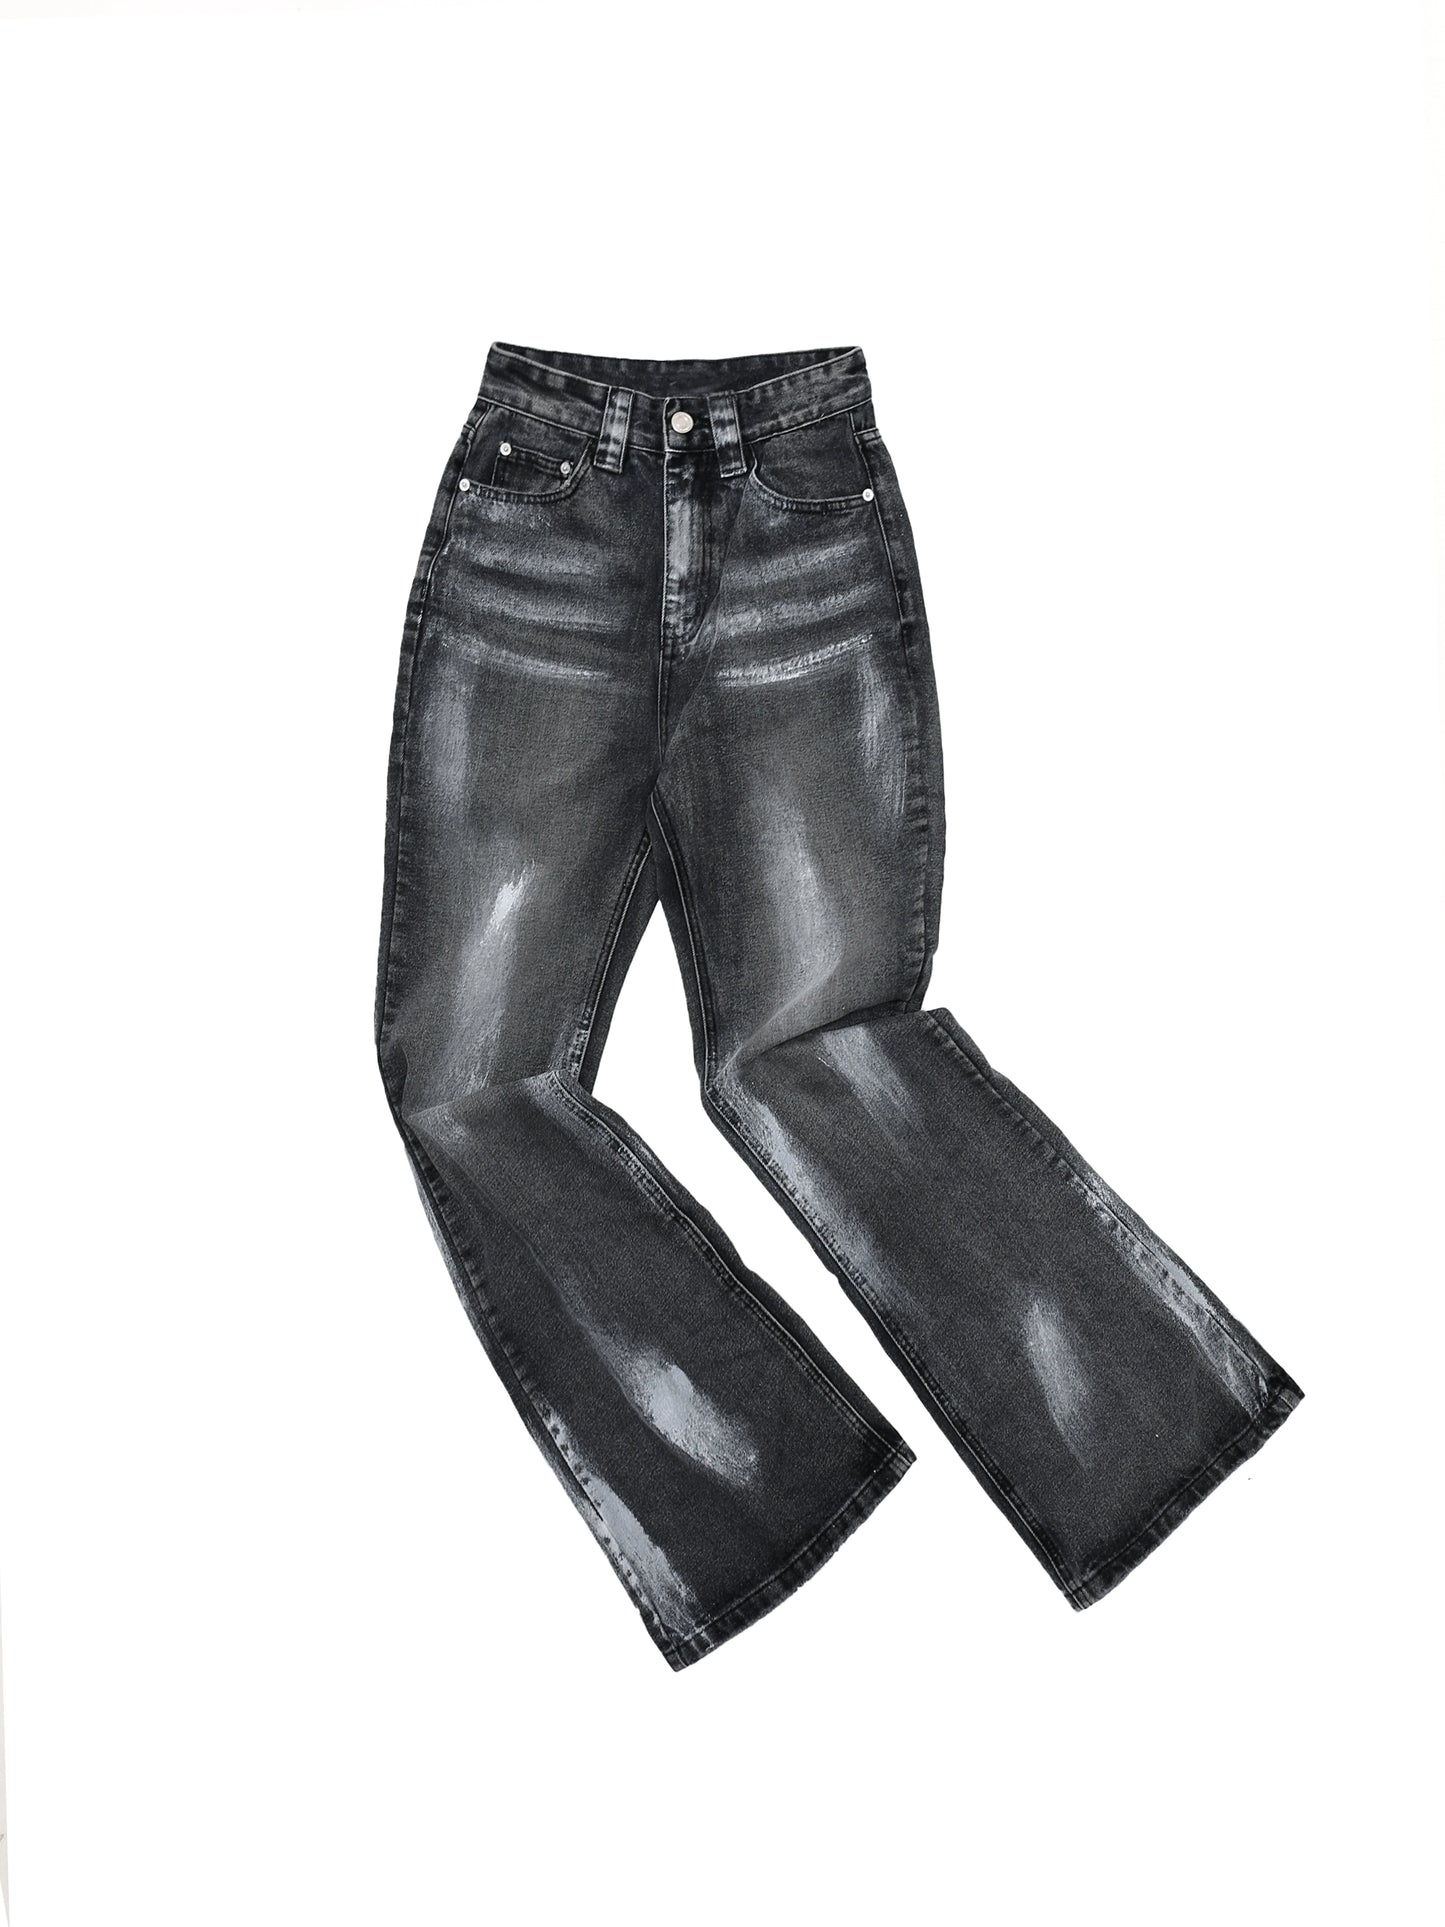 GIBBYCNA American Retro Washed Black Gray Slightly Flared Jeans Men's High Street vibe Style Slim Straight Pants